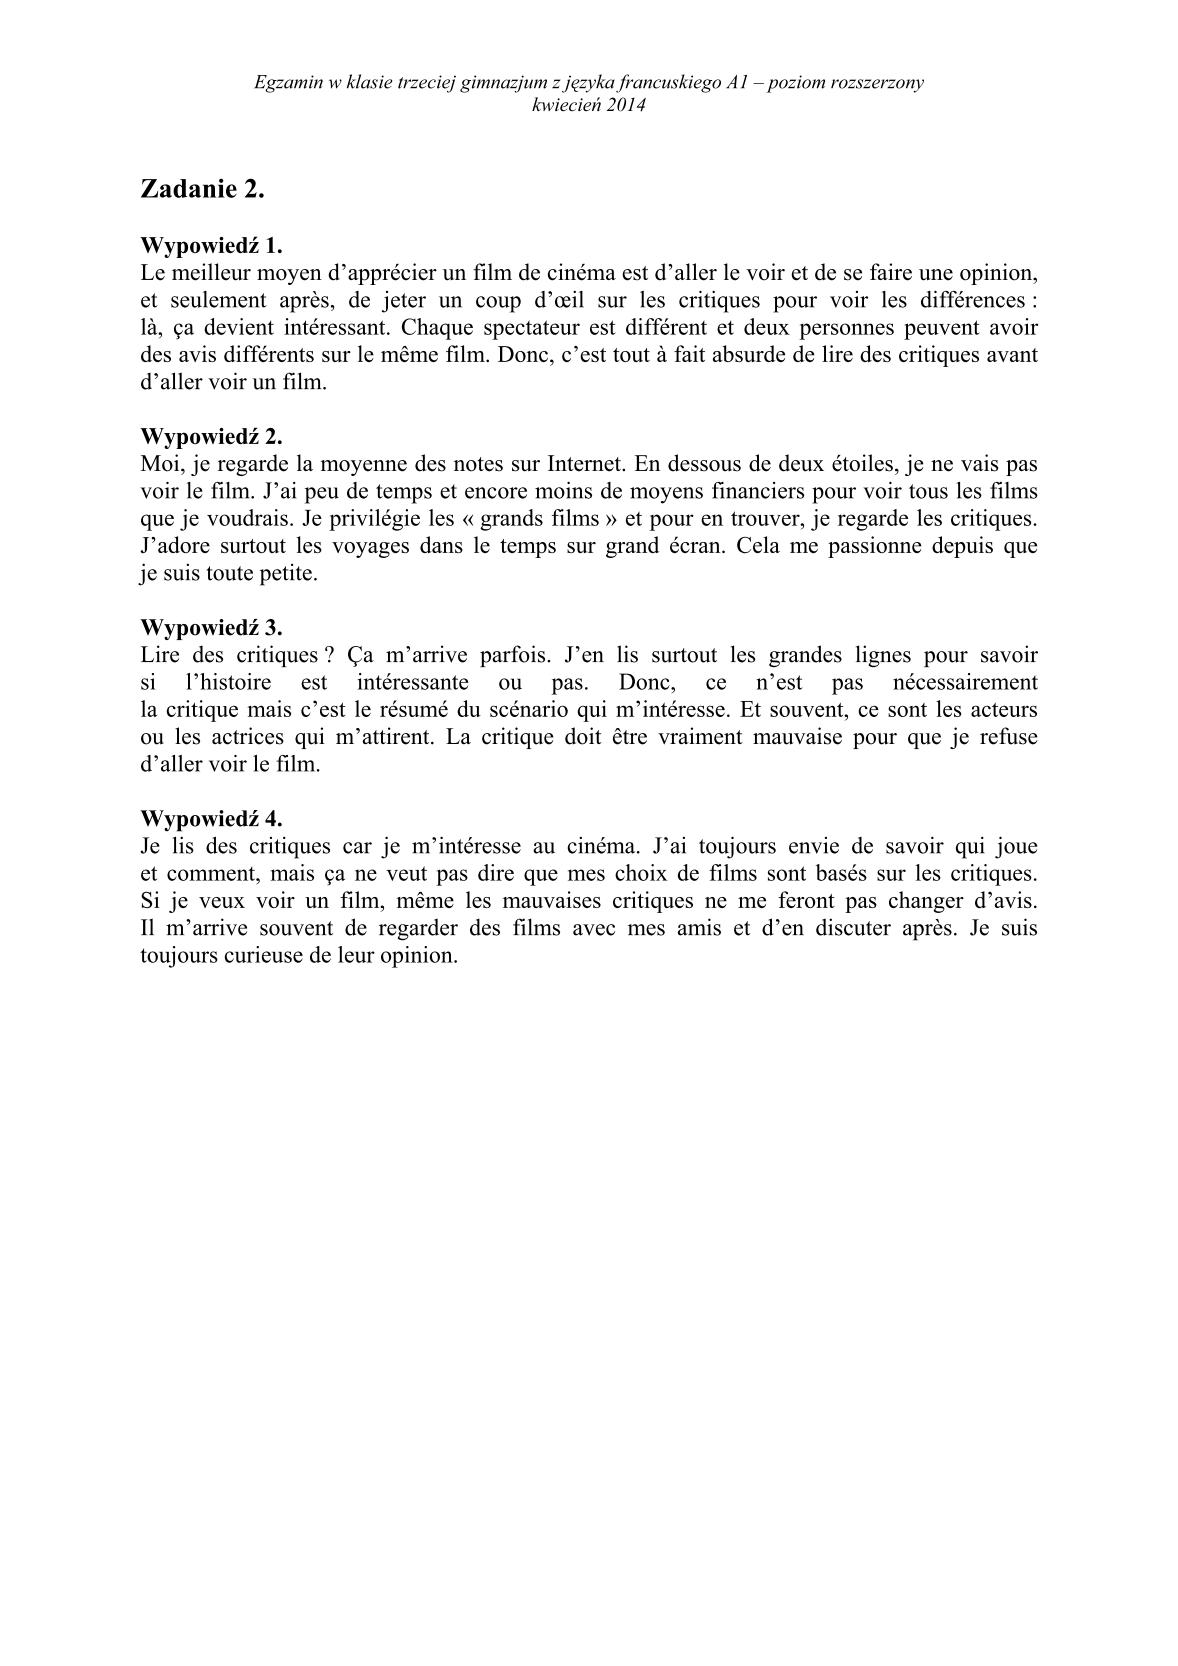 transkrypcja-francuski-poziom-rozszerzony-egzamin-gimnazjalny-25.04.2014-2